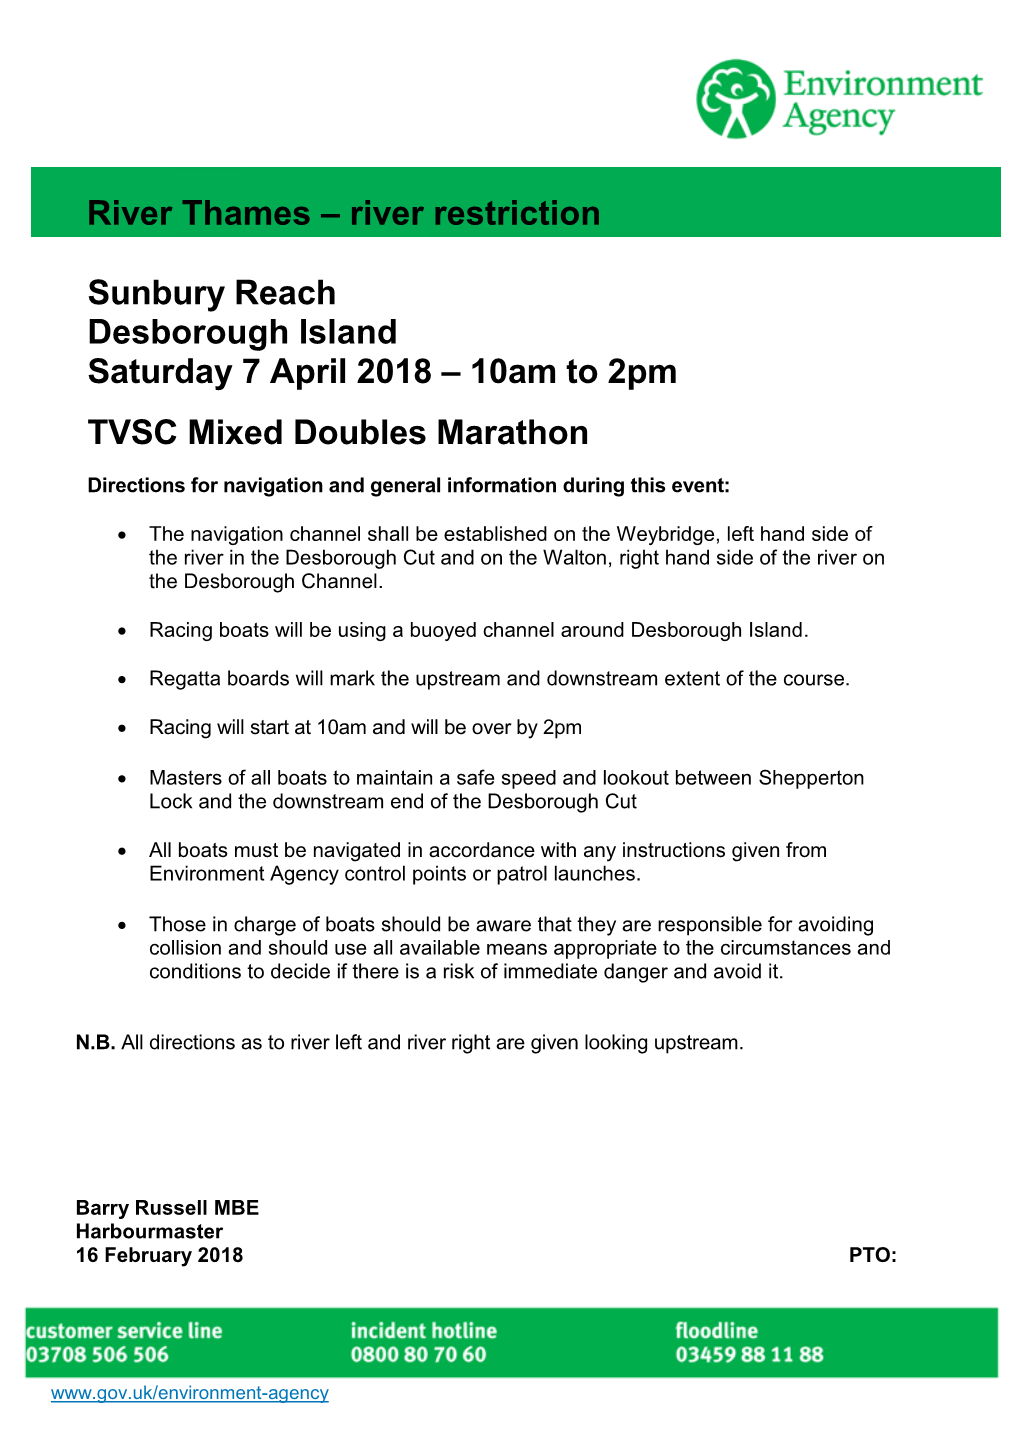 Sunbury Reach Desborough Island Saturday 7 April 2018 – 10Am to 2Pm TVSC Mixed Doubles Marathon River Thames – River Restric